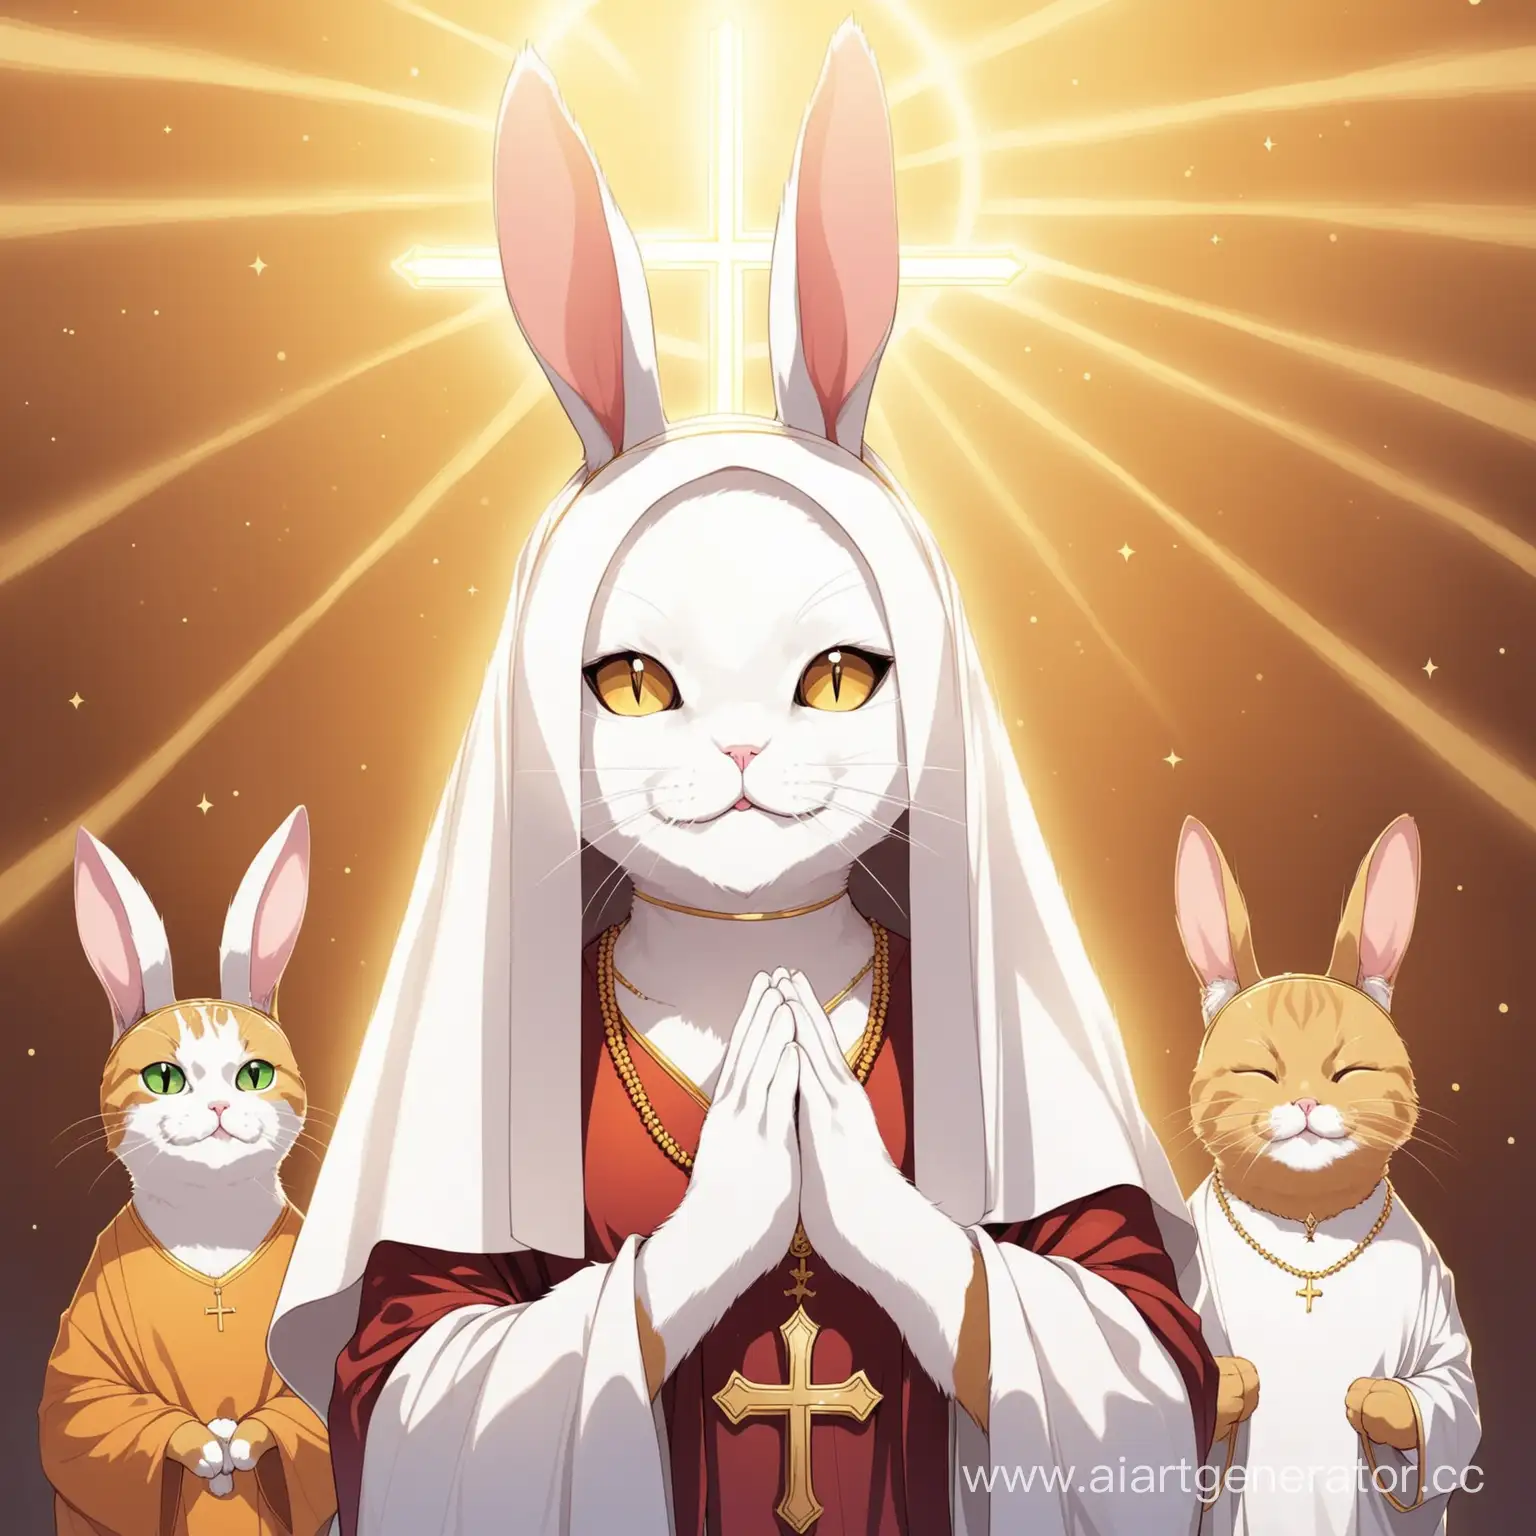 Cats-with-Rabbit-Ears-Establishing-Global-Religion